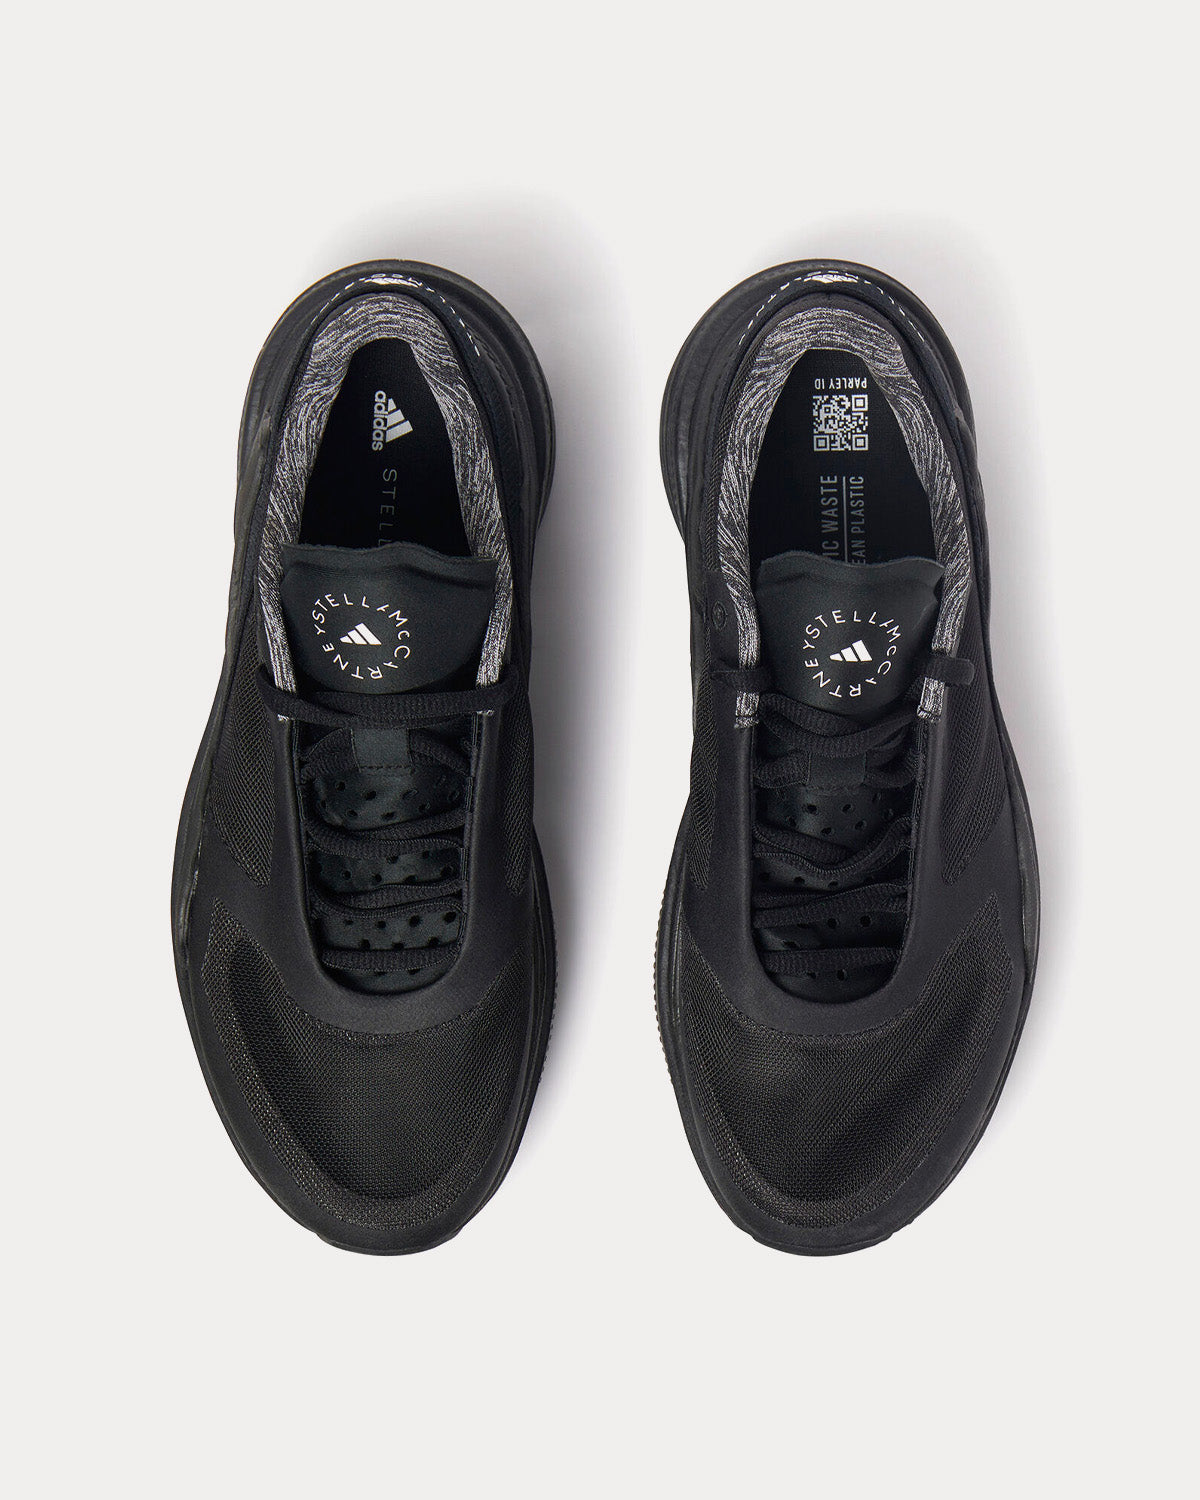 Adidas X Stella McCartney - Earthlight Core Black Running Shoes